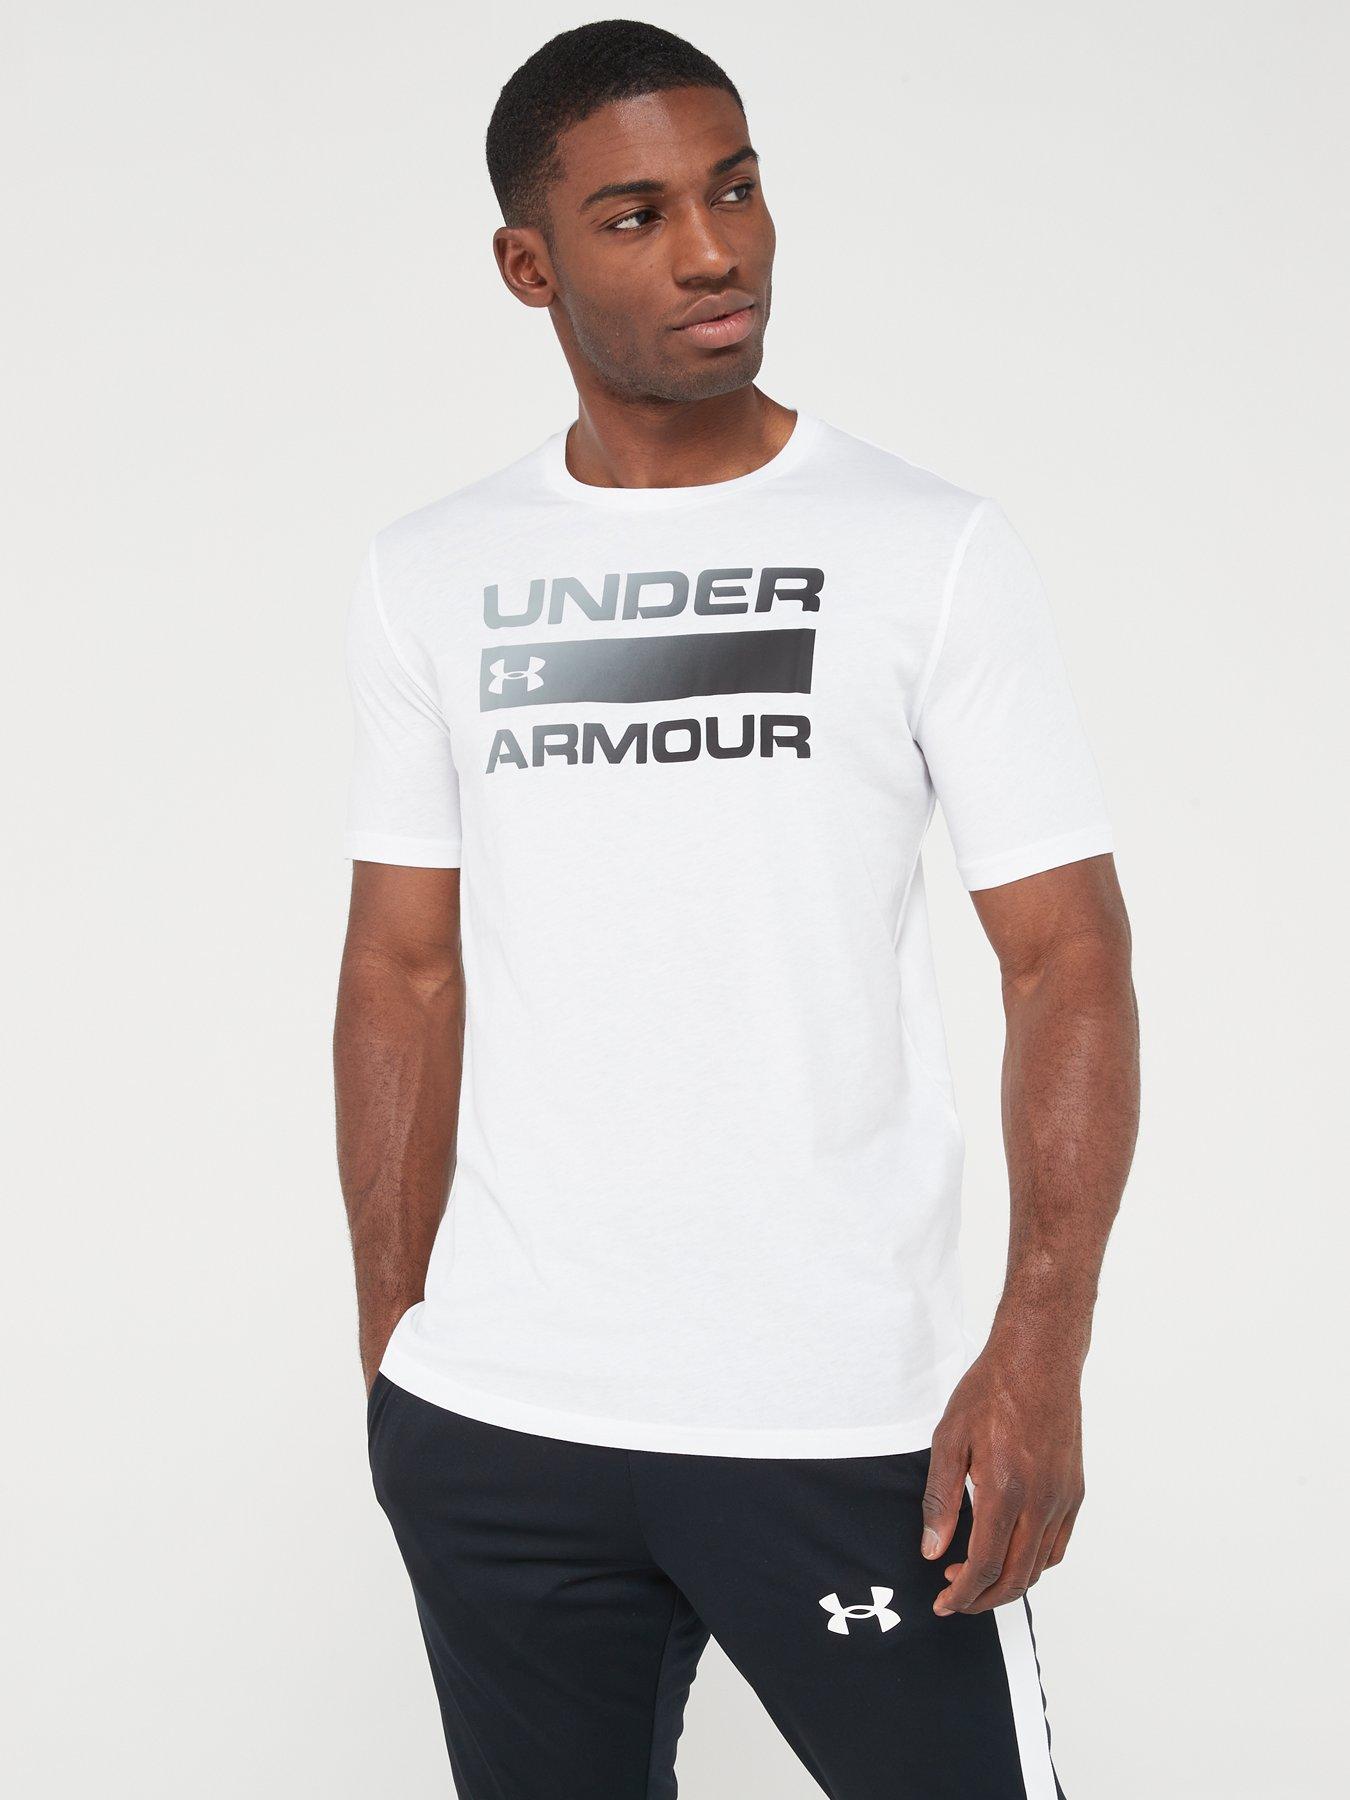 Under Armour Shorts Men 2XL White Swoosh Logo Loose Fit Athletic Running  Jogging